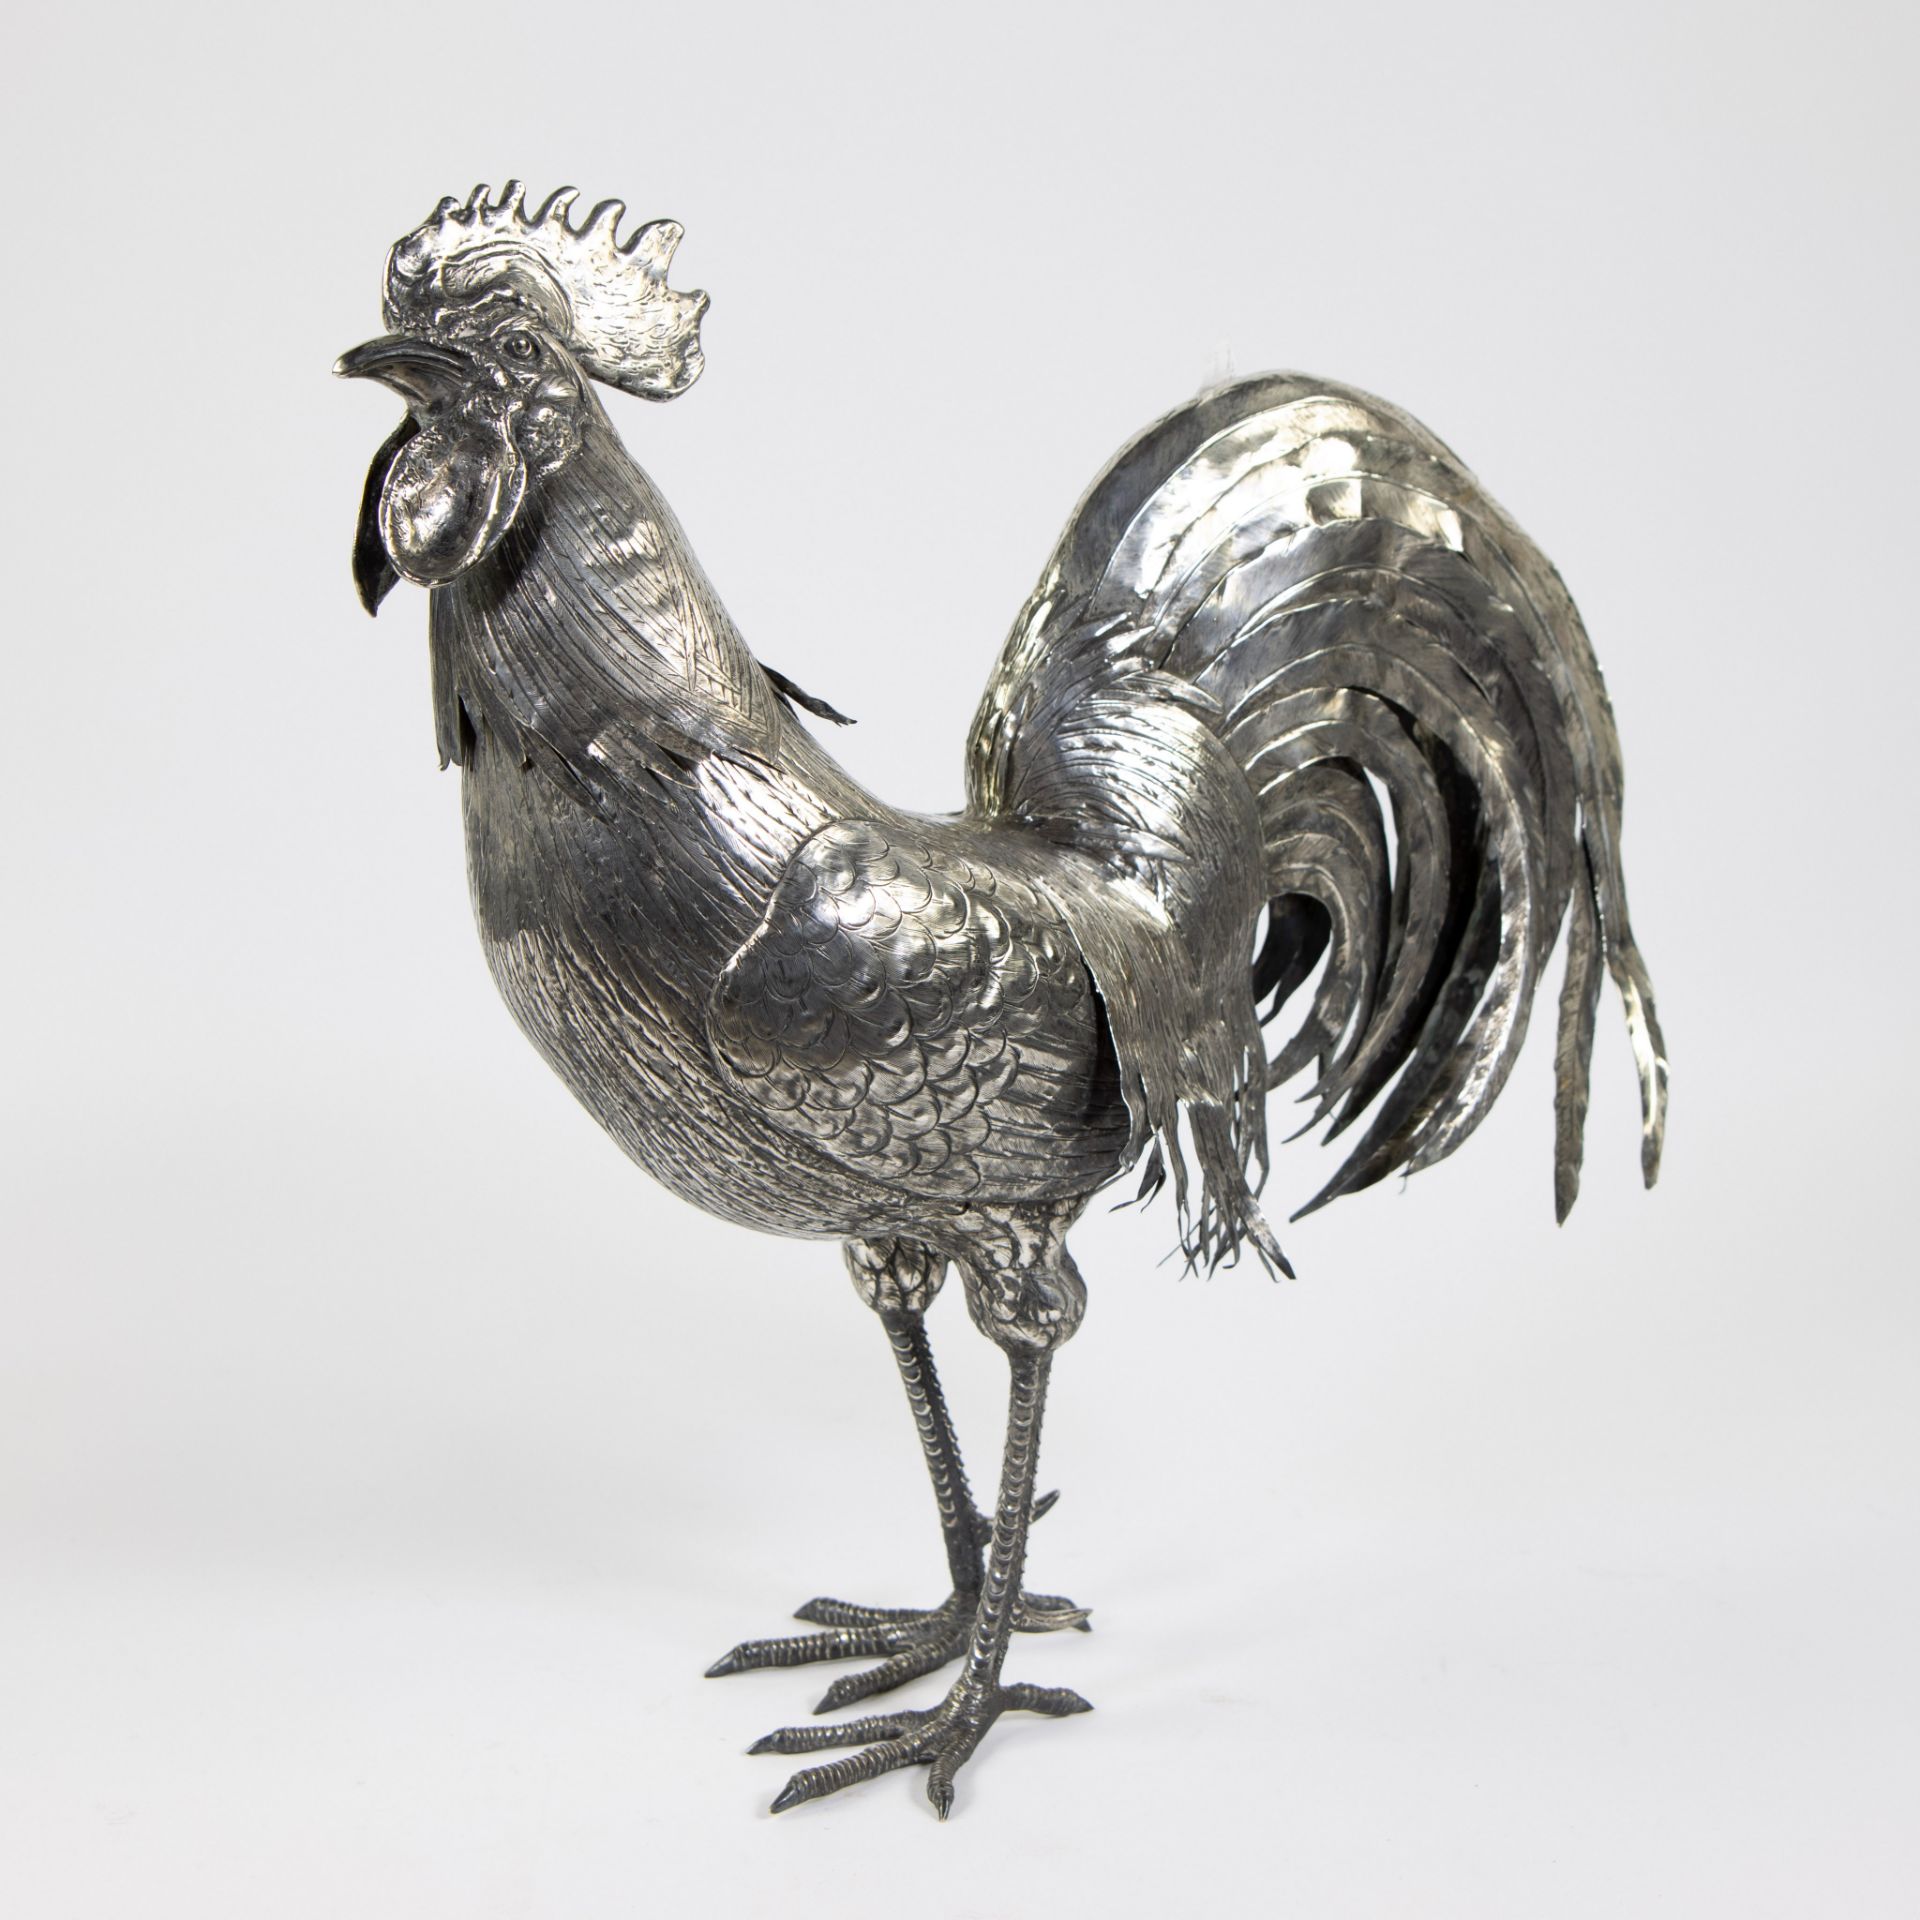 Solid silver rooster, marked Neresheimer & Sohne, 1893-1903, silver 813, German Hannau